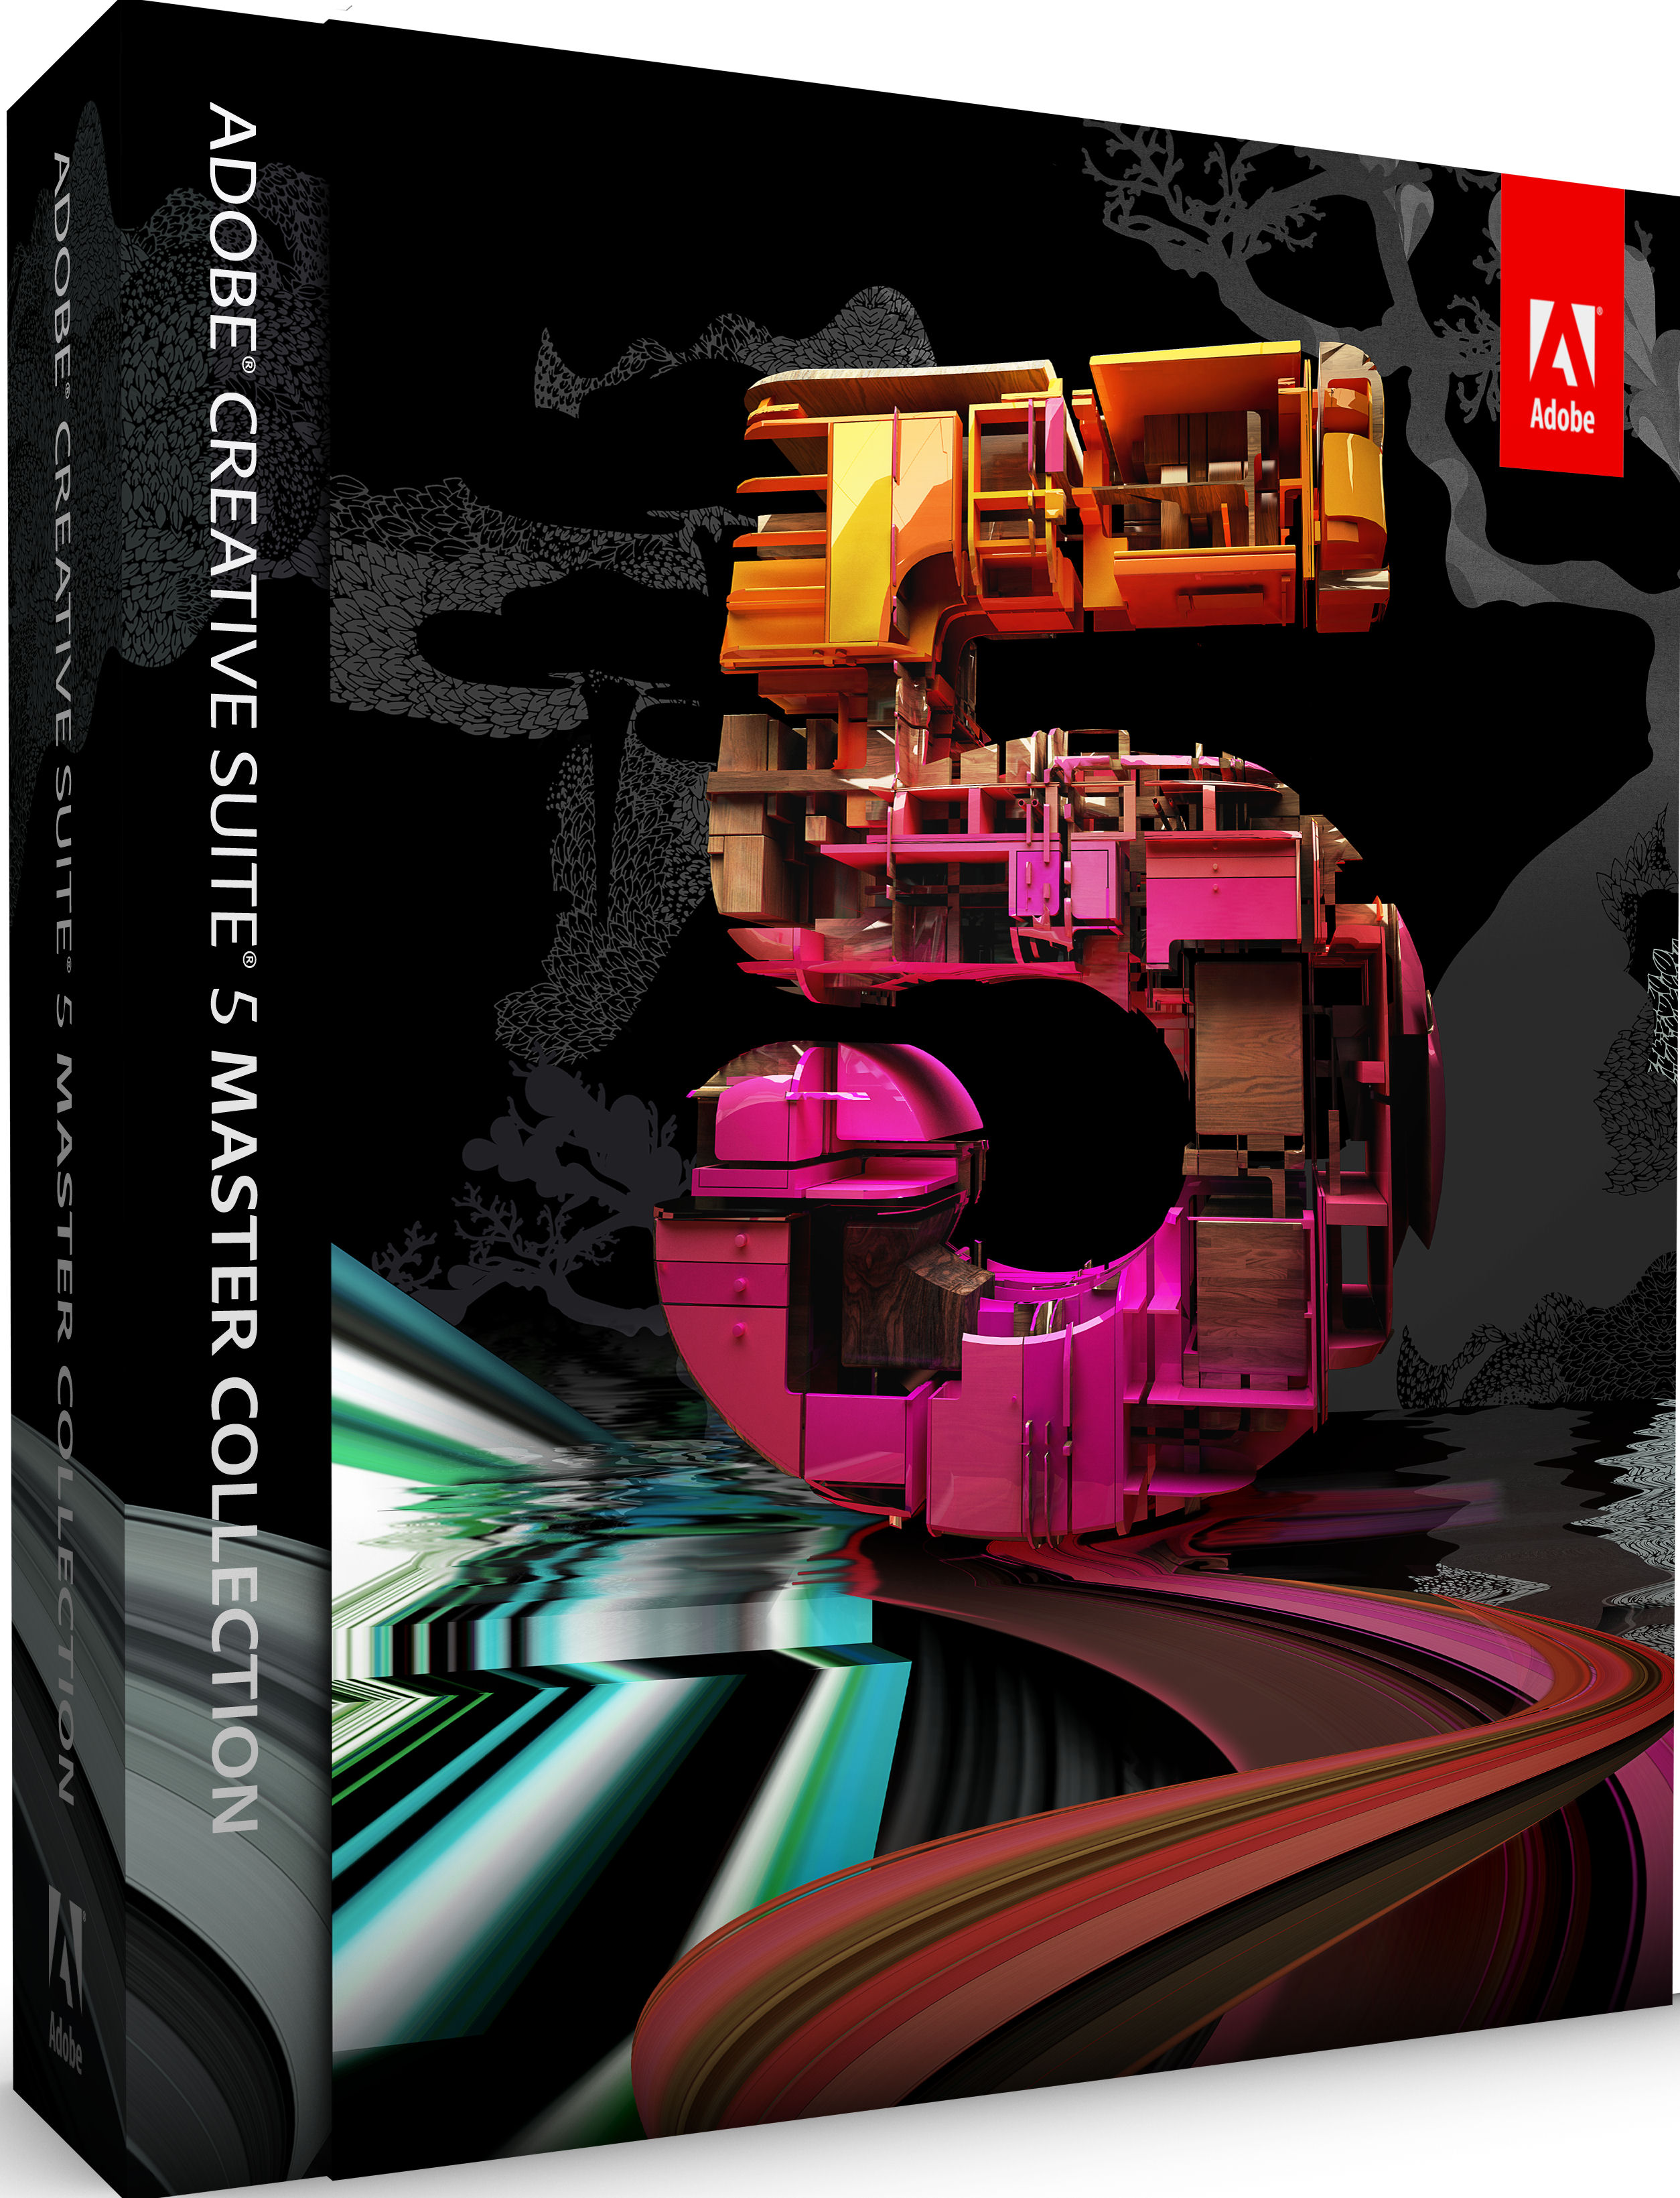 Adobe Creative Suite 4 Torrent Free